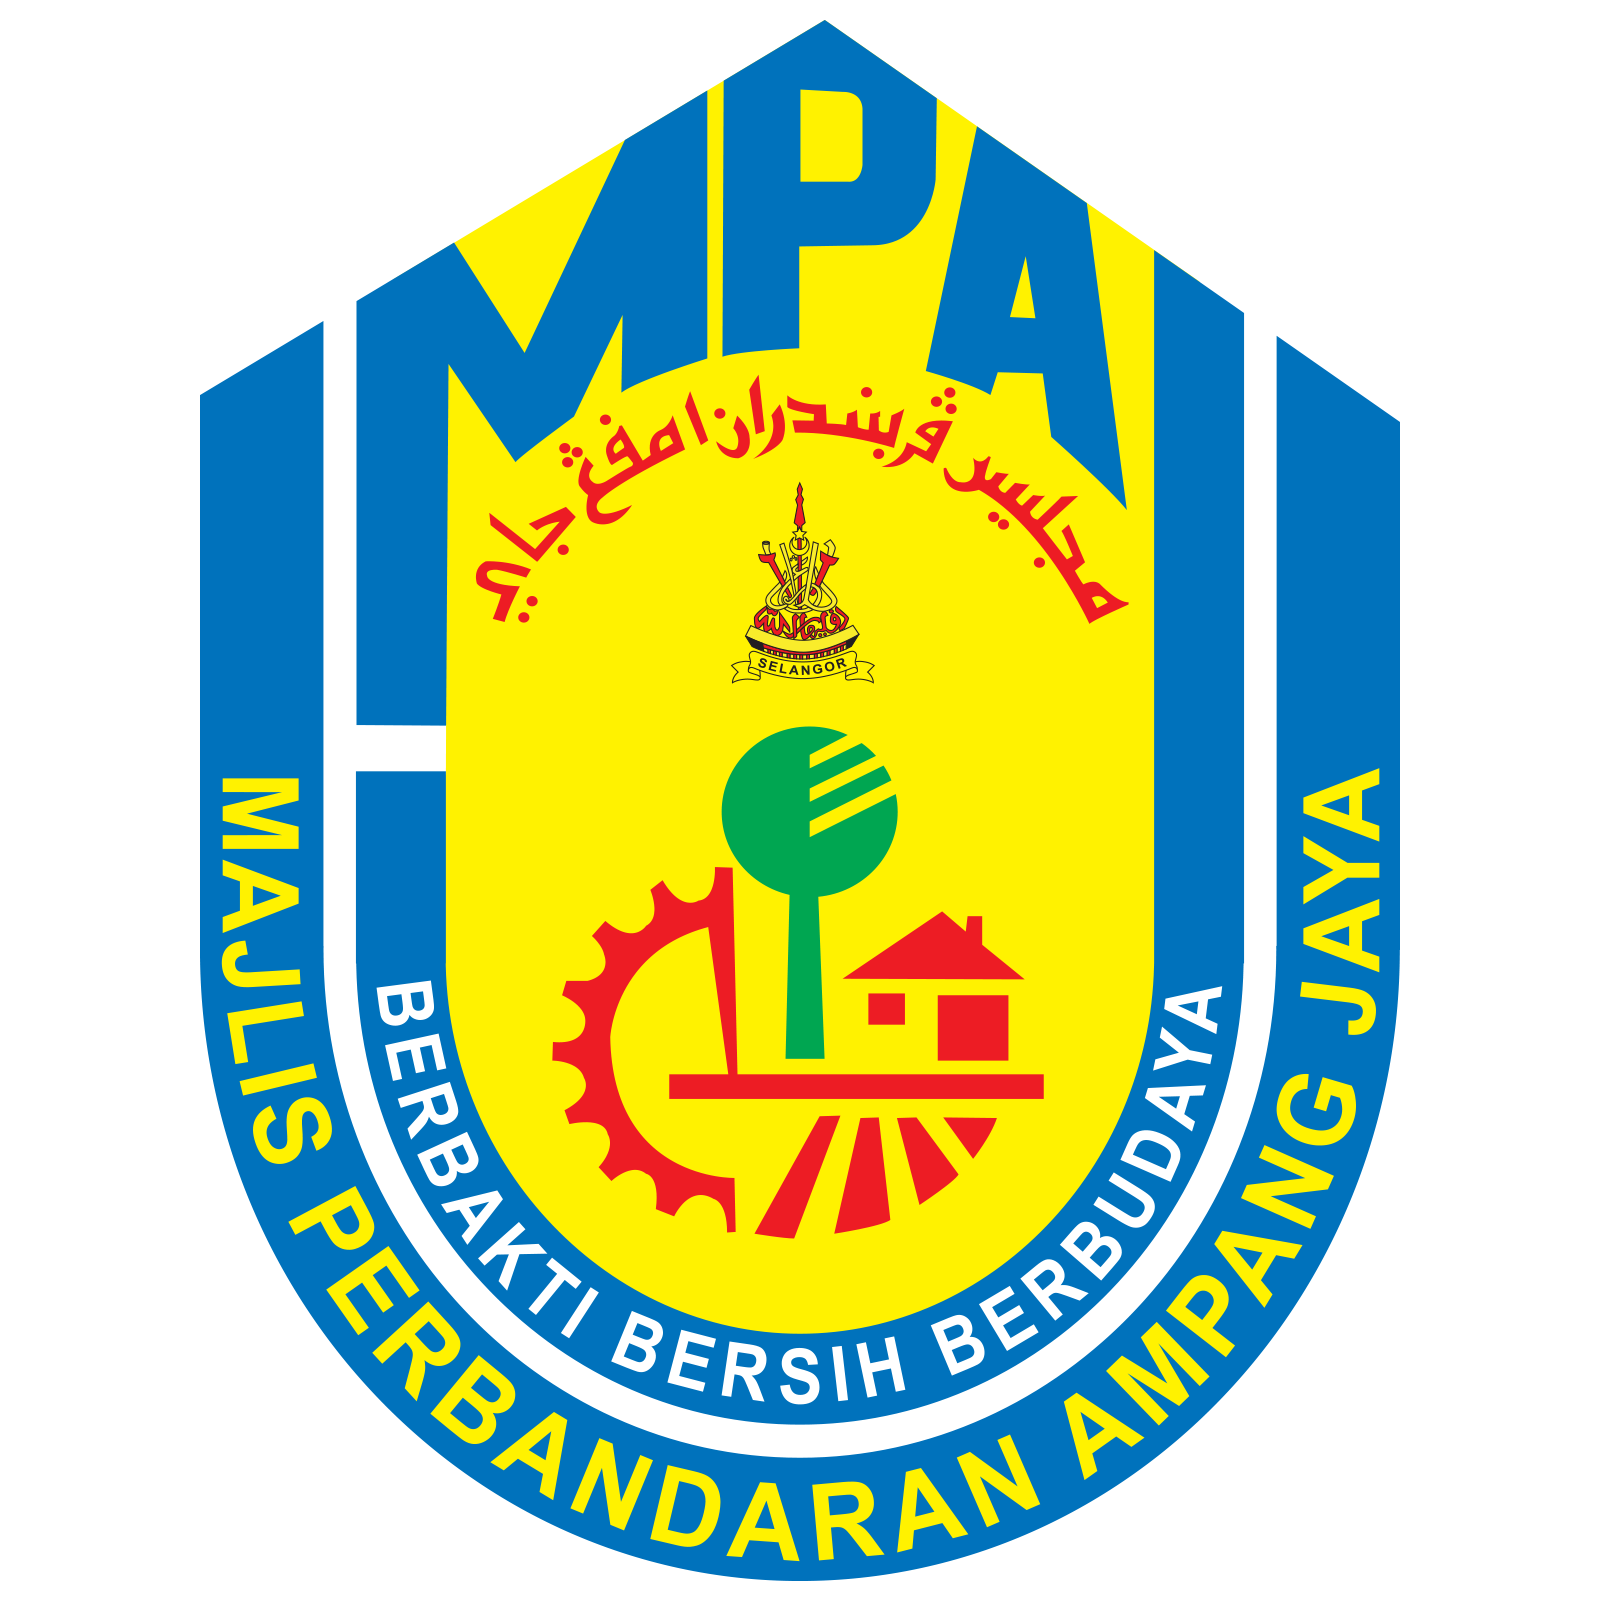 mpaj logo